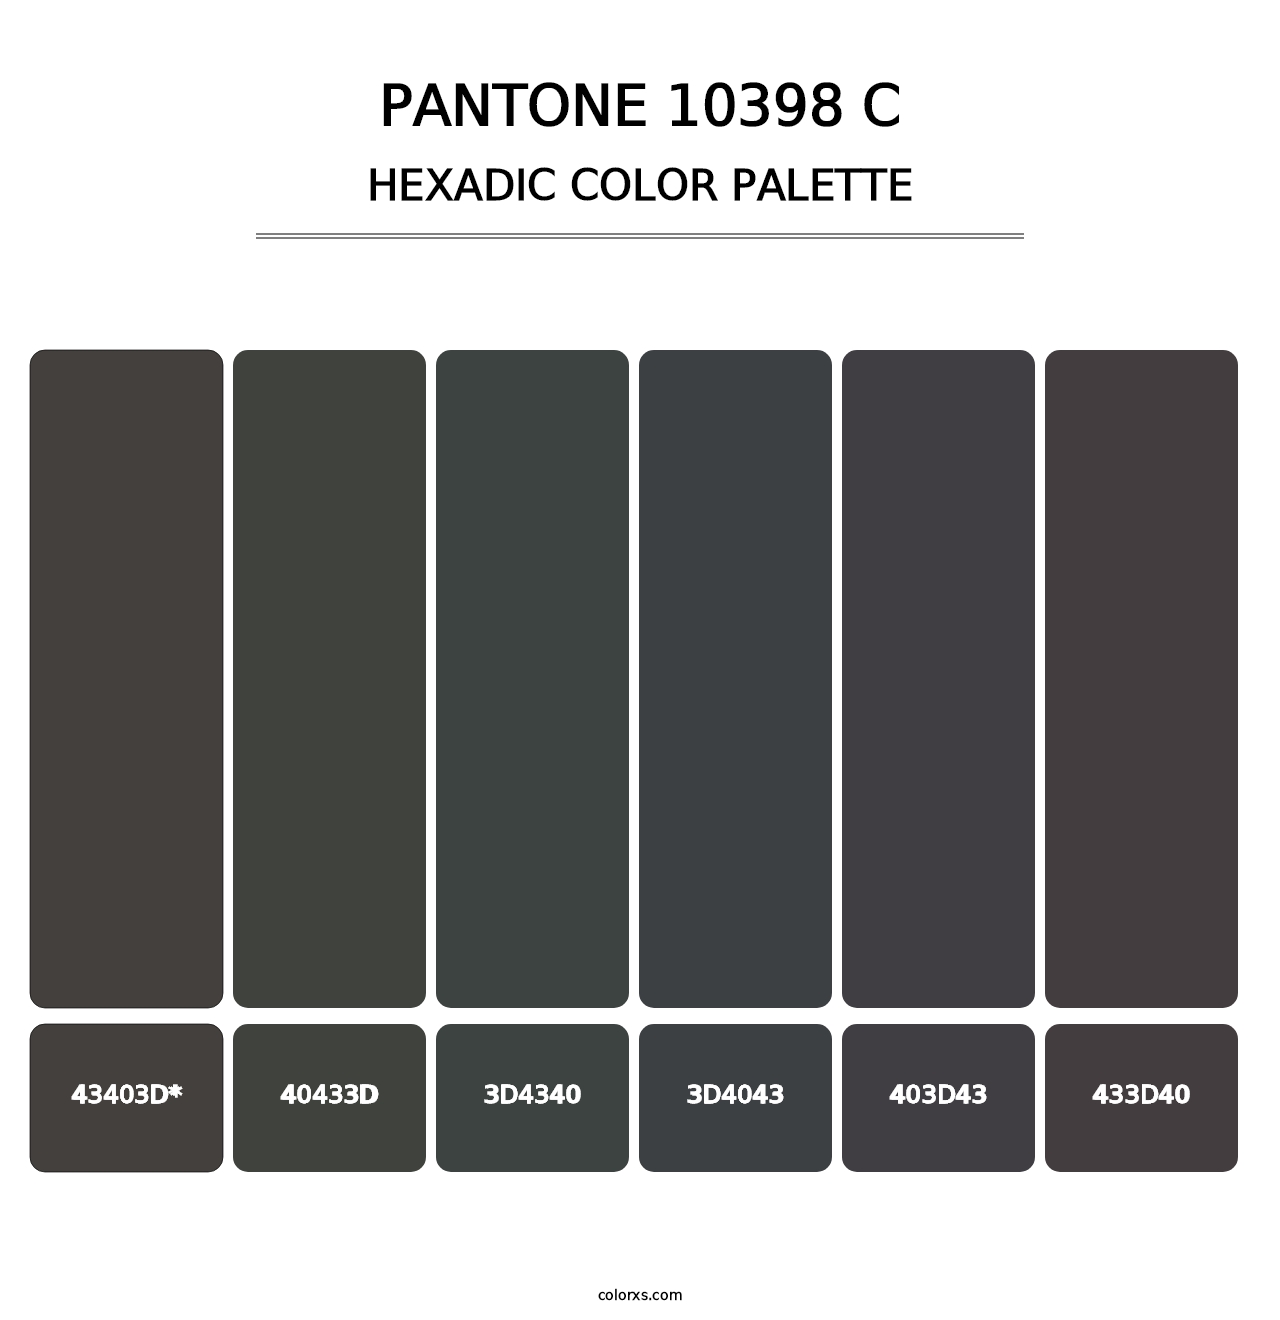 PANTONE 10398 C - Hexadic Color Palette